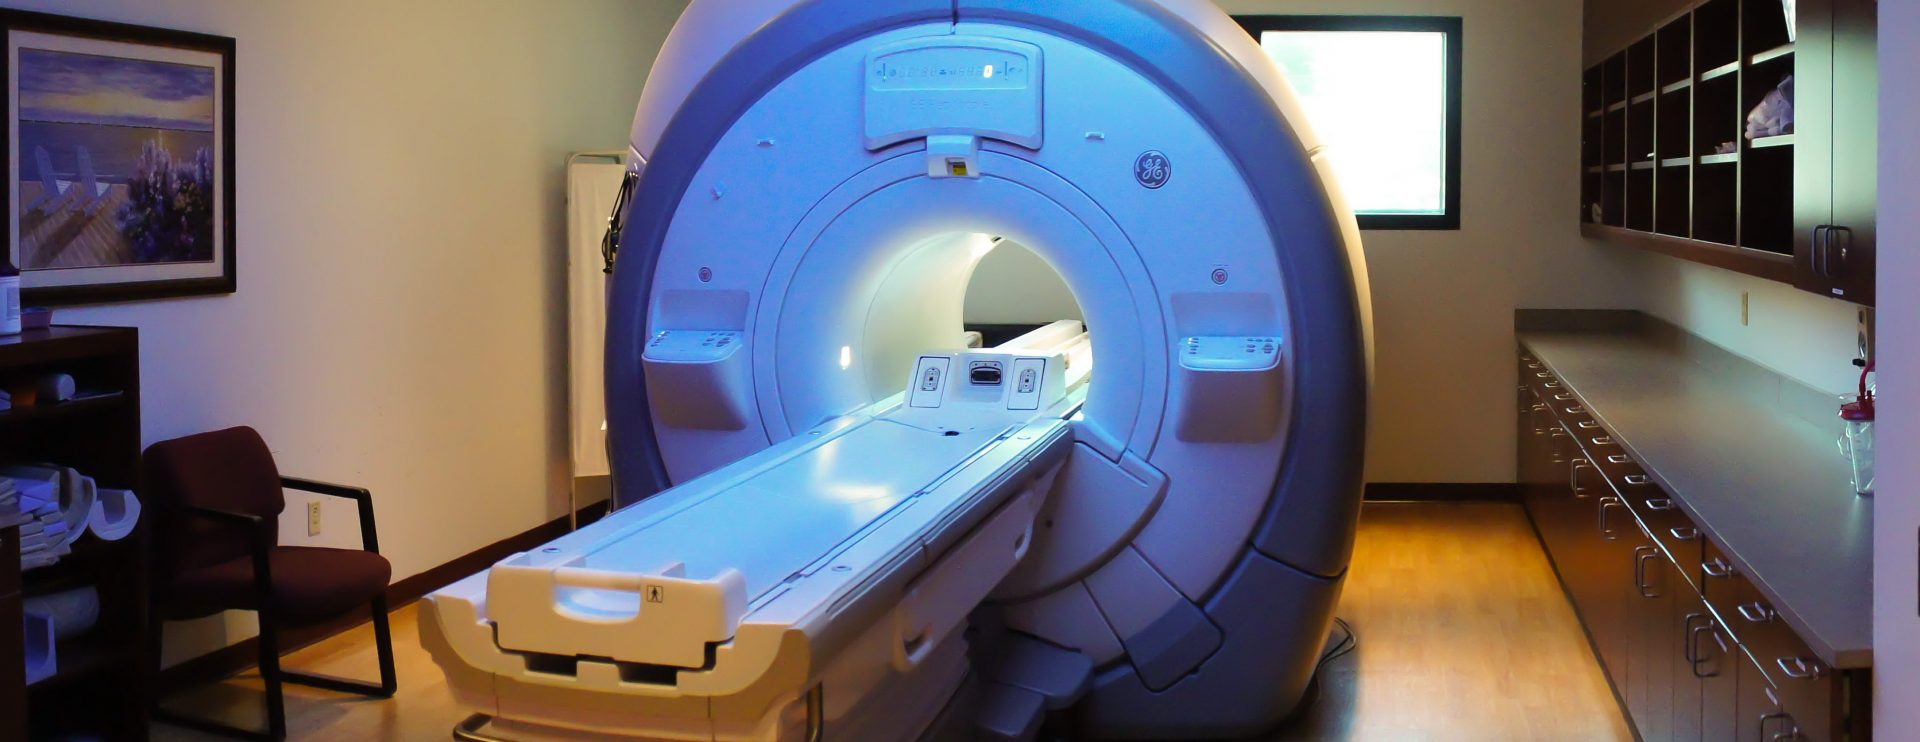 MRI Pelvis Prostate Exam Case Study